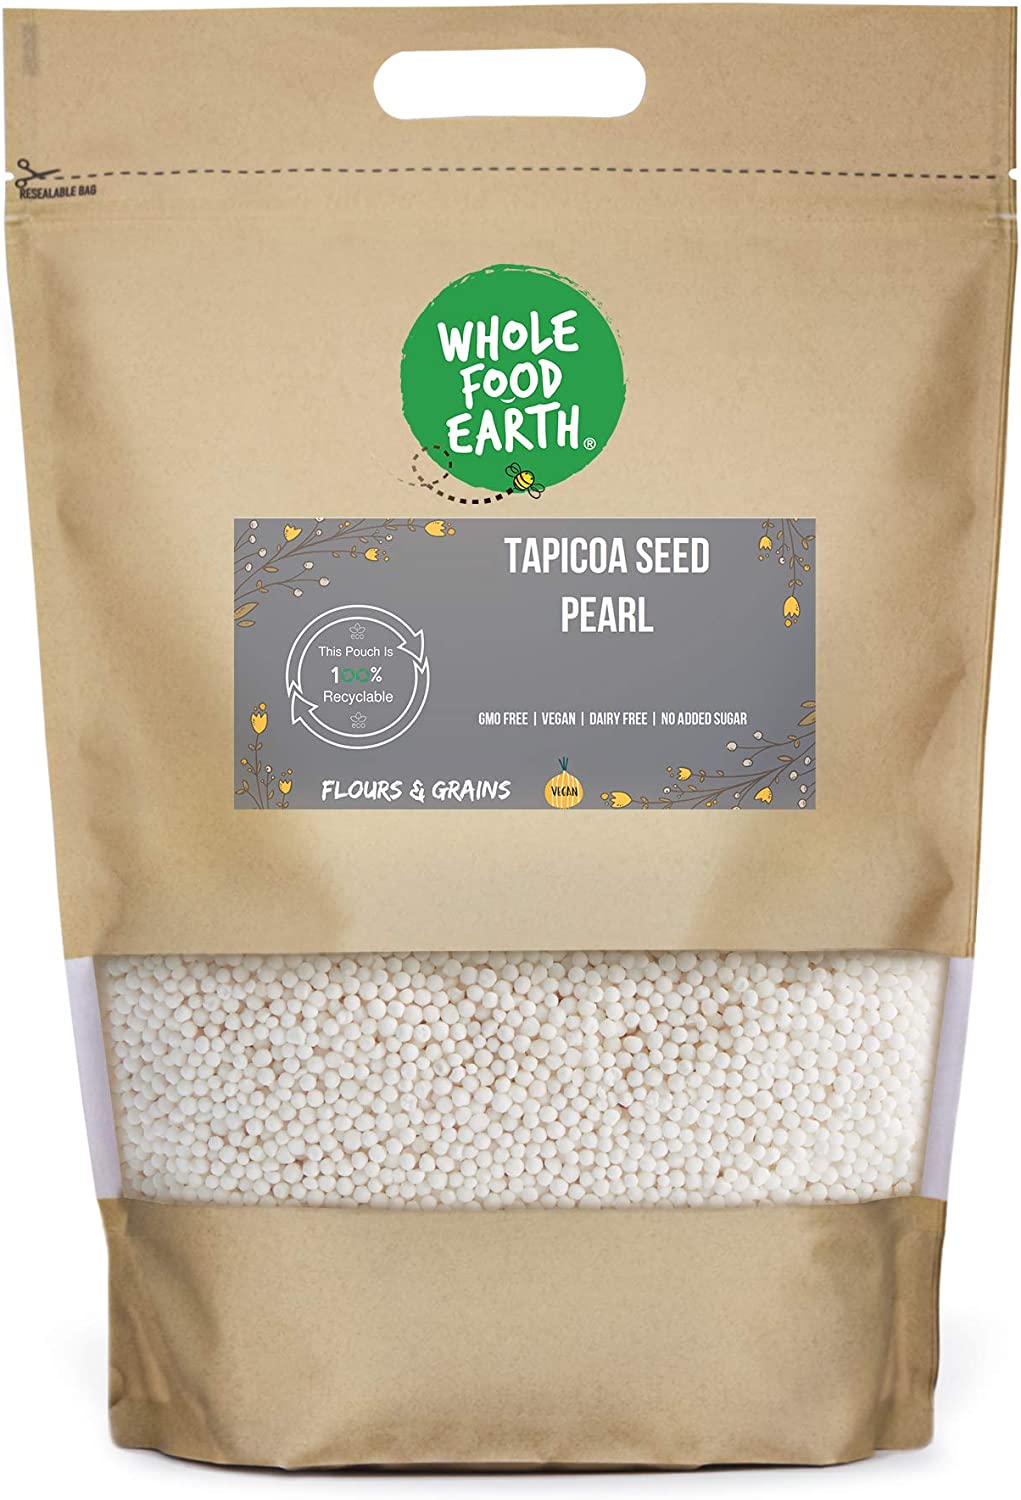 Wholefood Earth Tapicoa Seed Pearl 1kg RRP £5.15 CLEARANCE XL £2.50